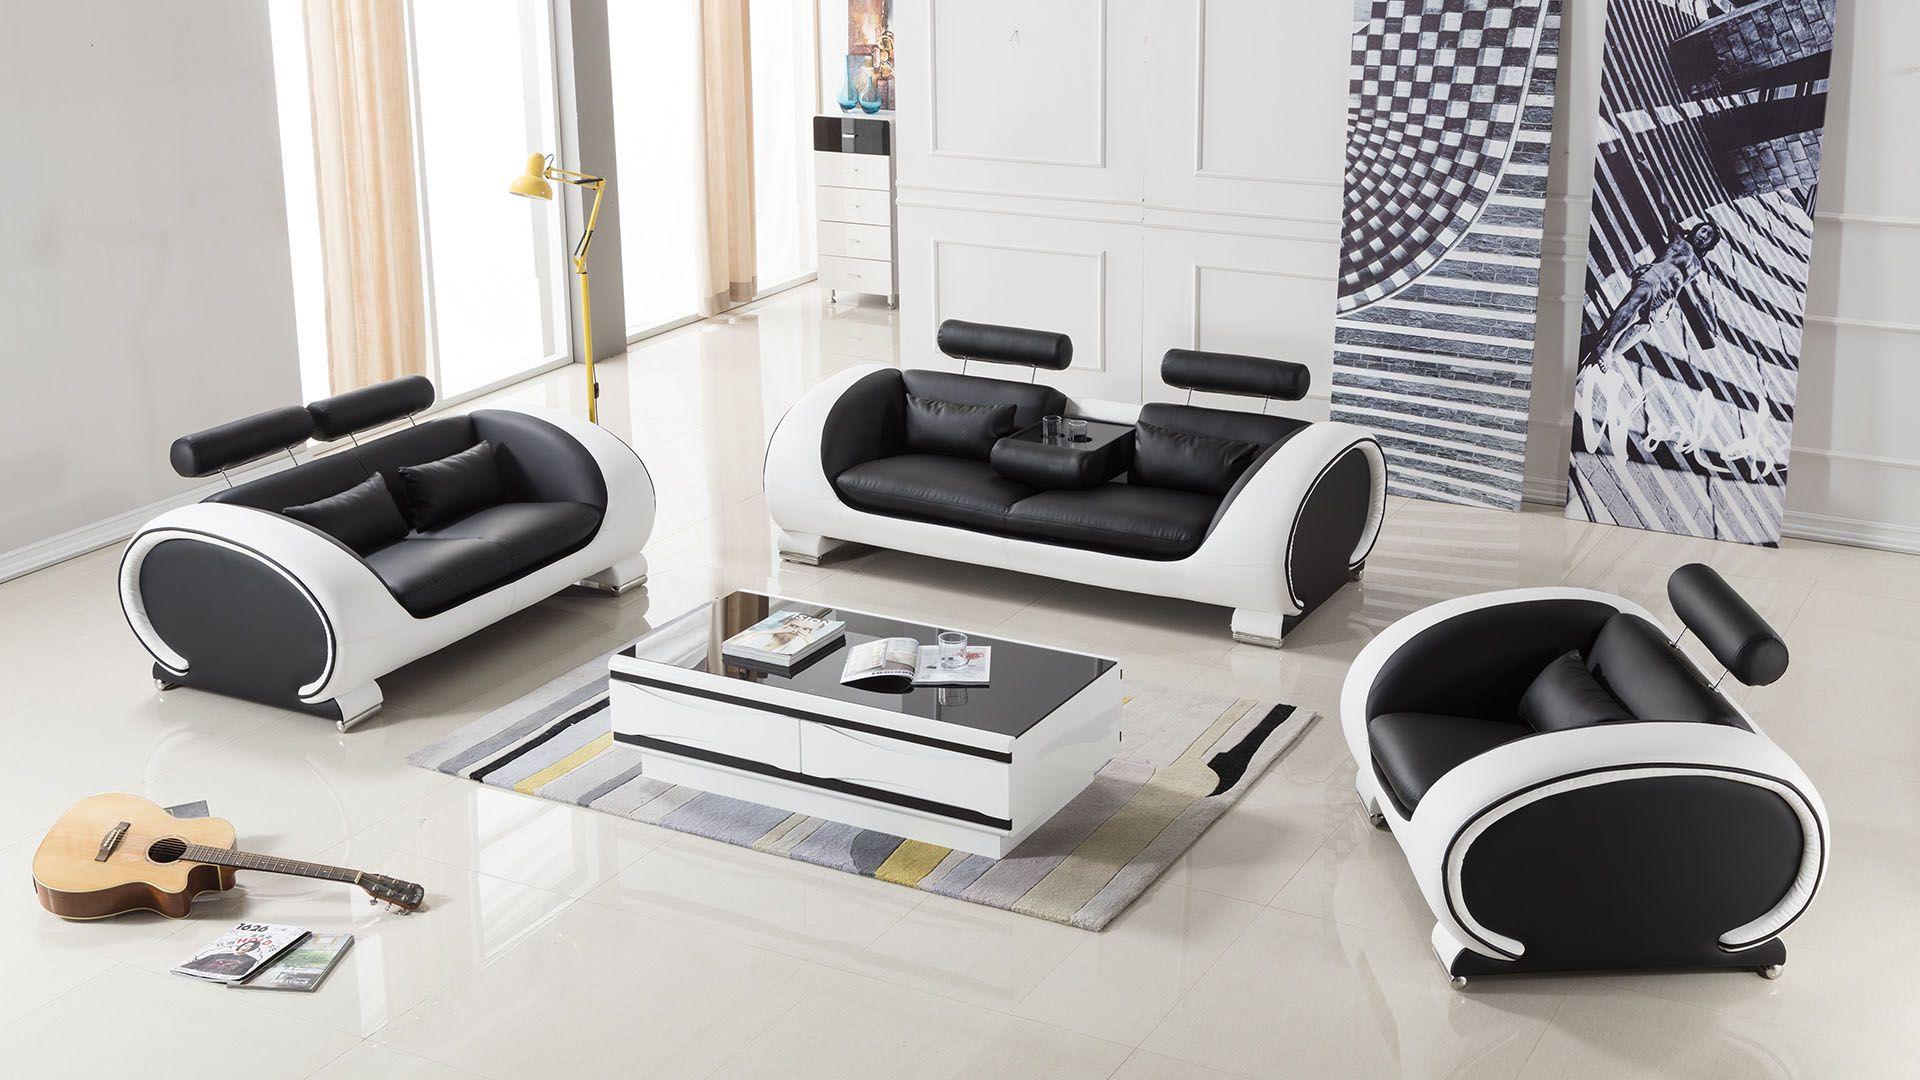 Contemporary, Modern Sofa Set AE-D802-BK-W AE-D802-BK-W-3PC in White, Black Bonded Leather